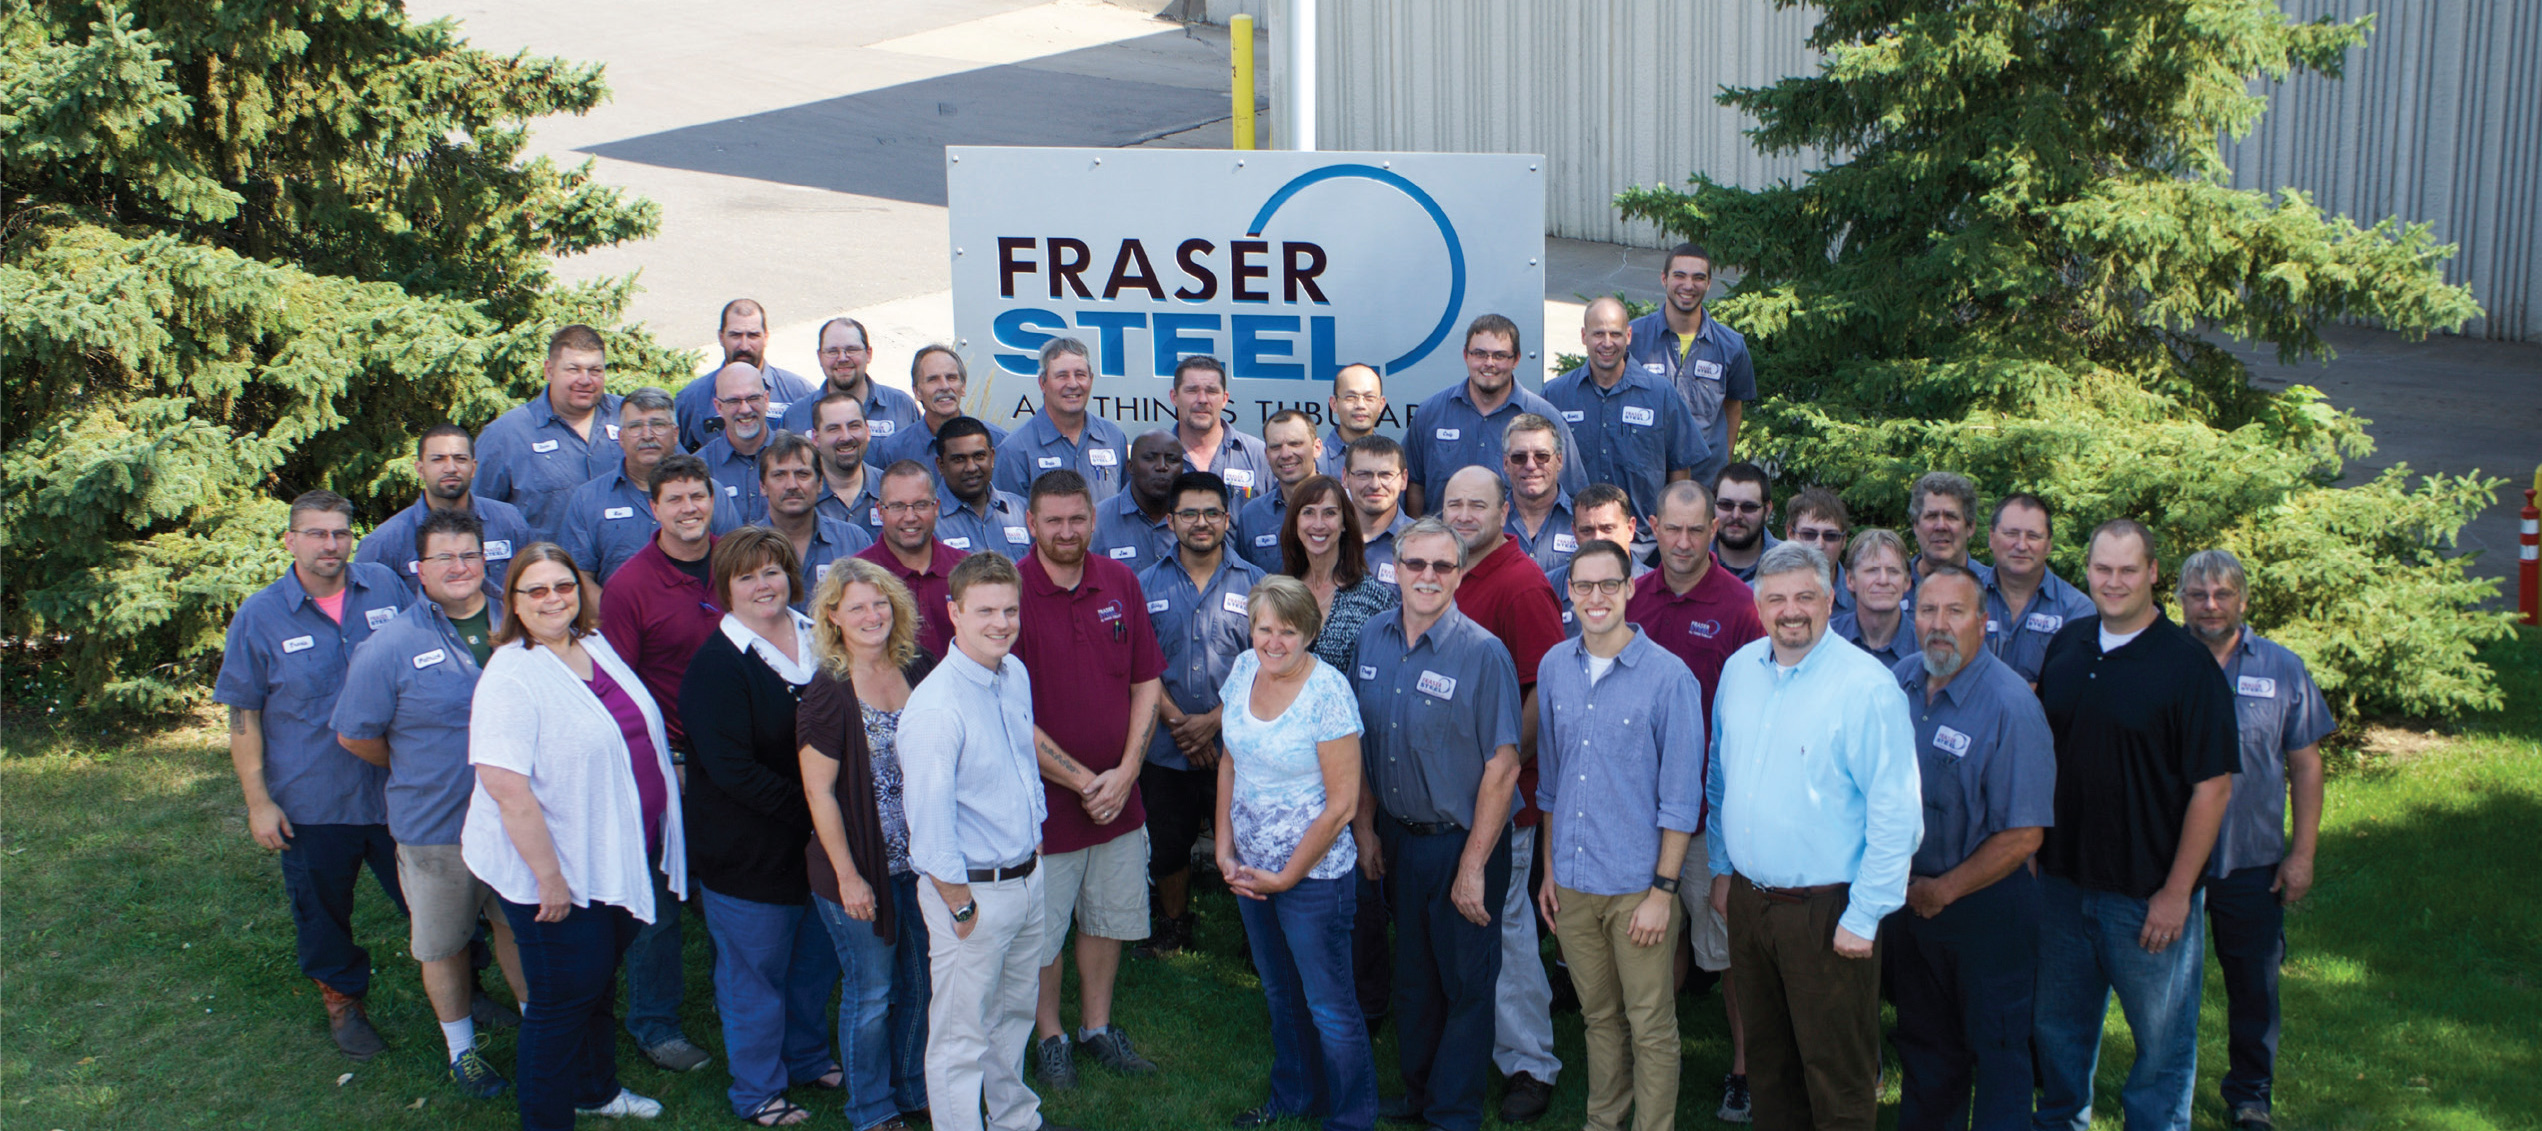 Fraser Steel Group Photo 2016